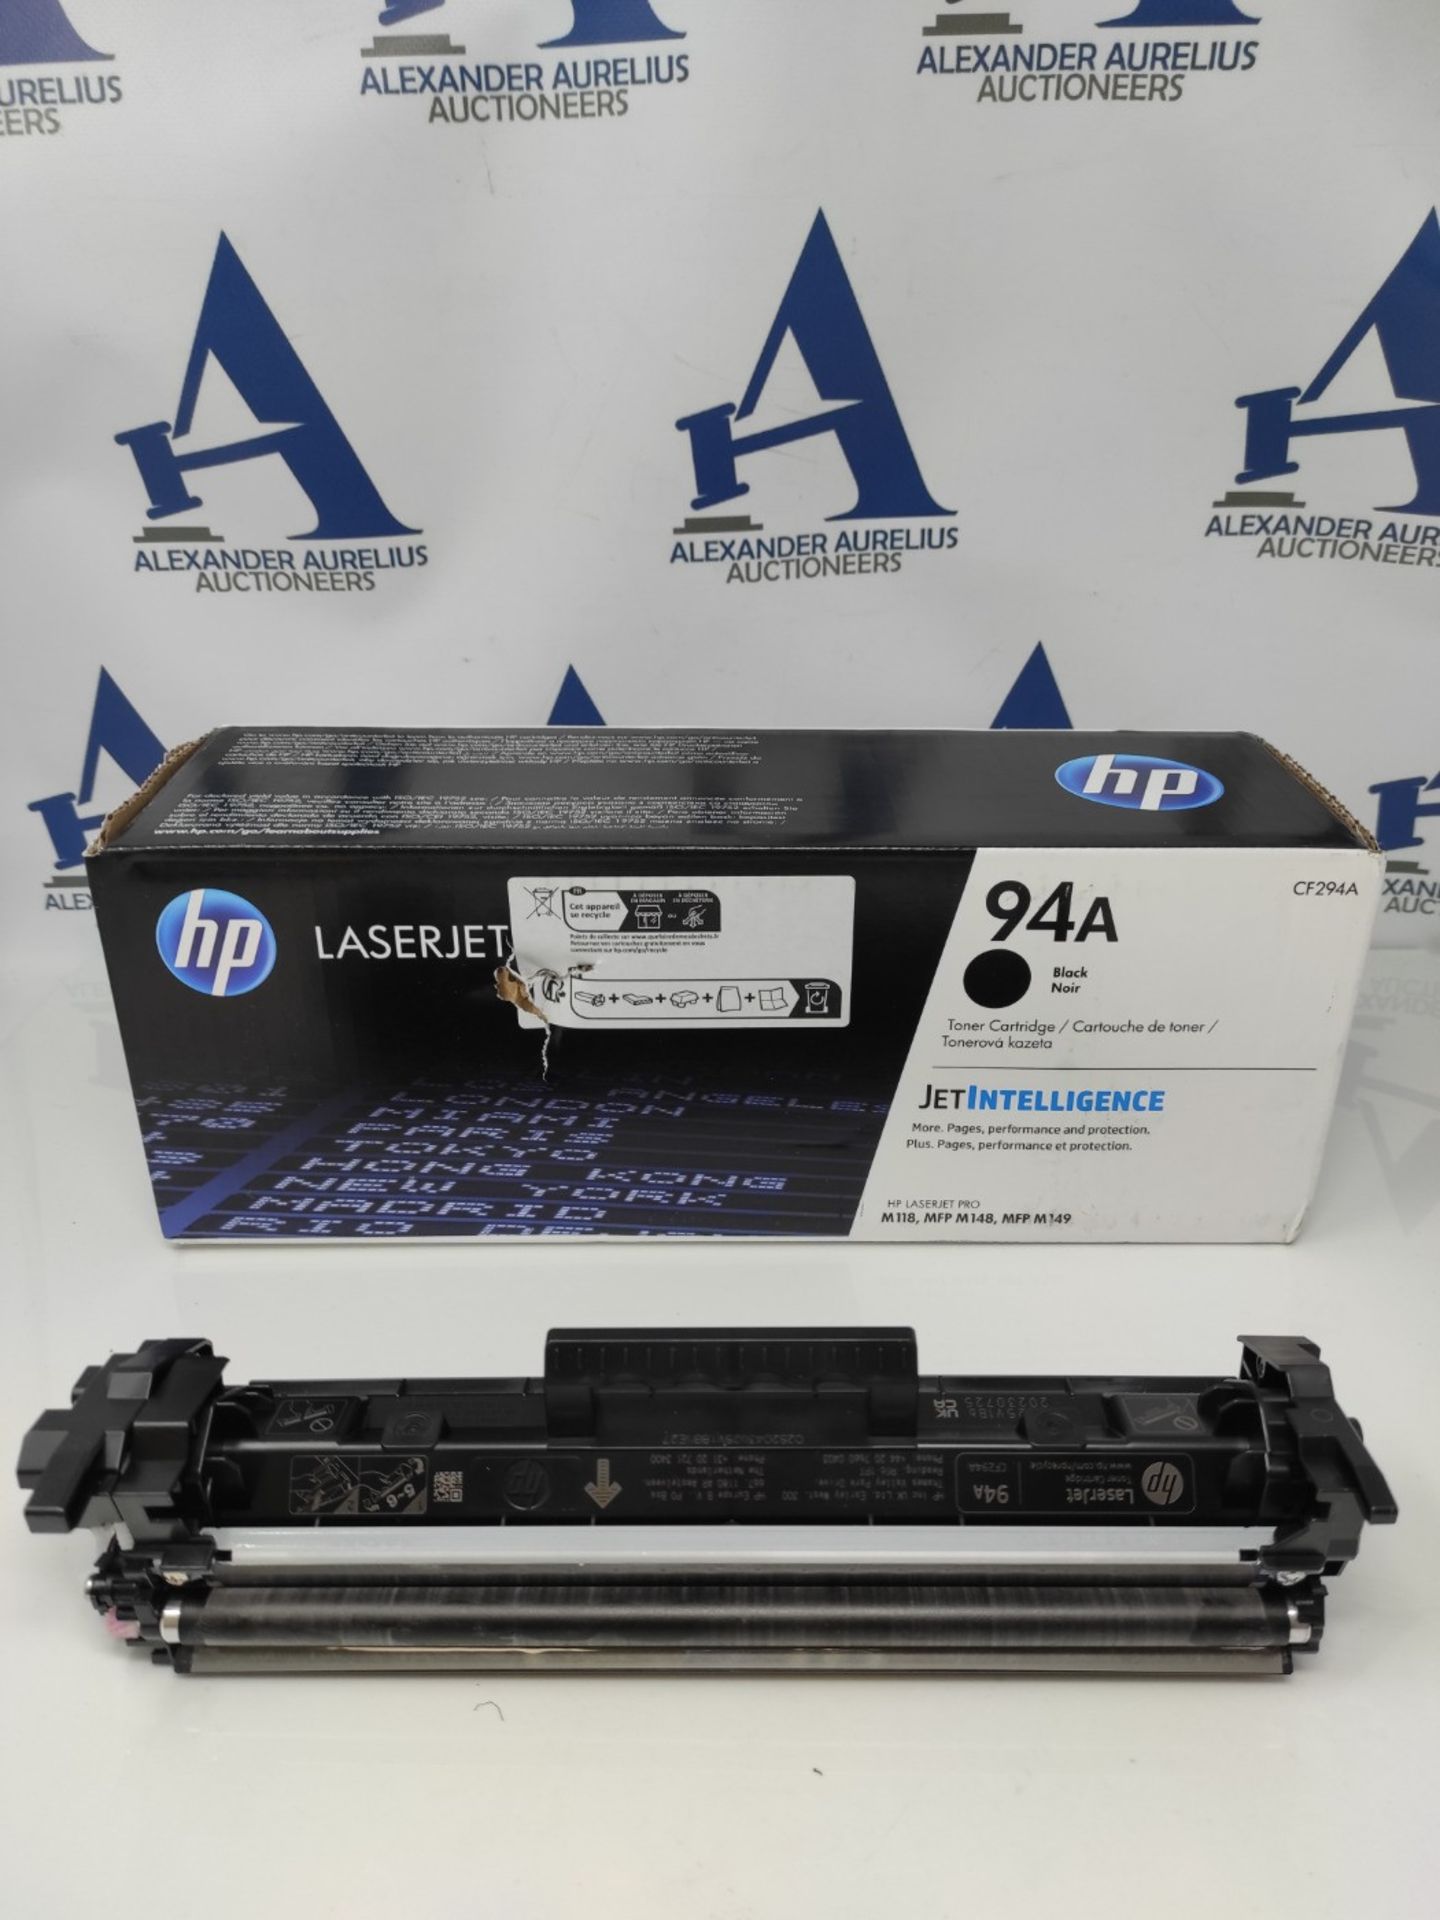 HP CF294A 94A Original LaserJet Toner Cartridge, Black, Single Pack - Image 2 of 2